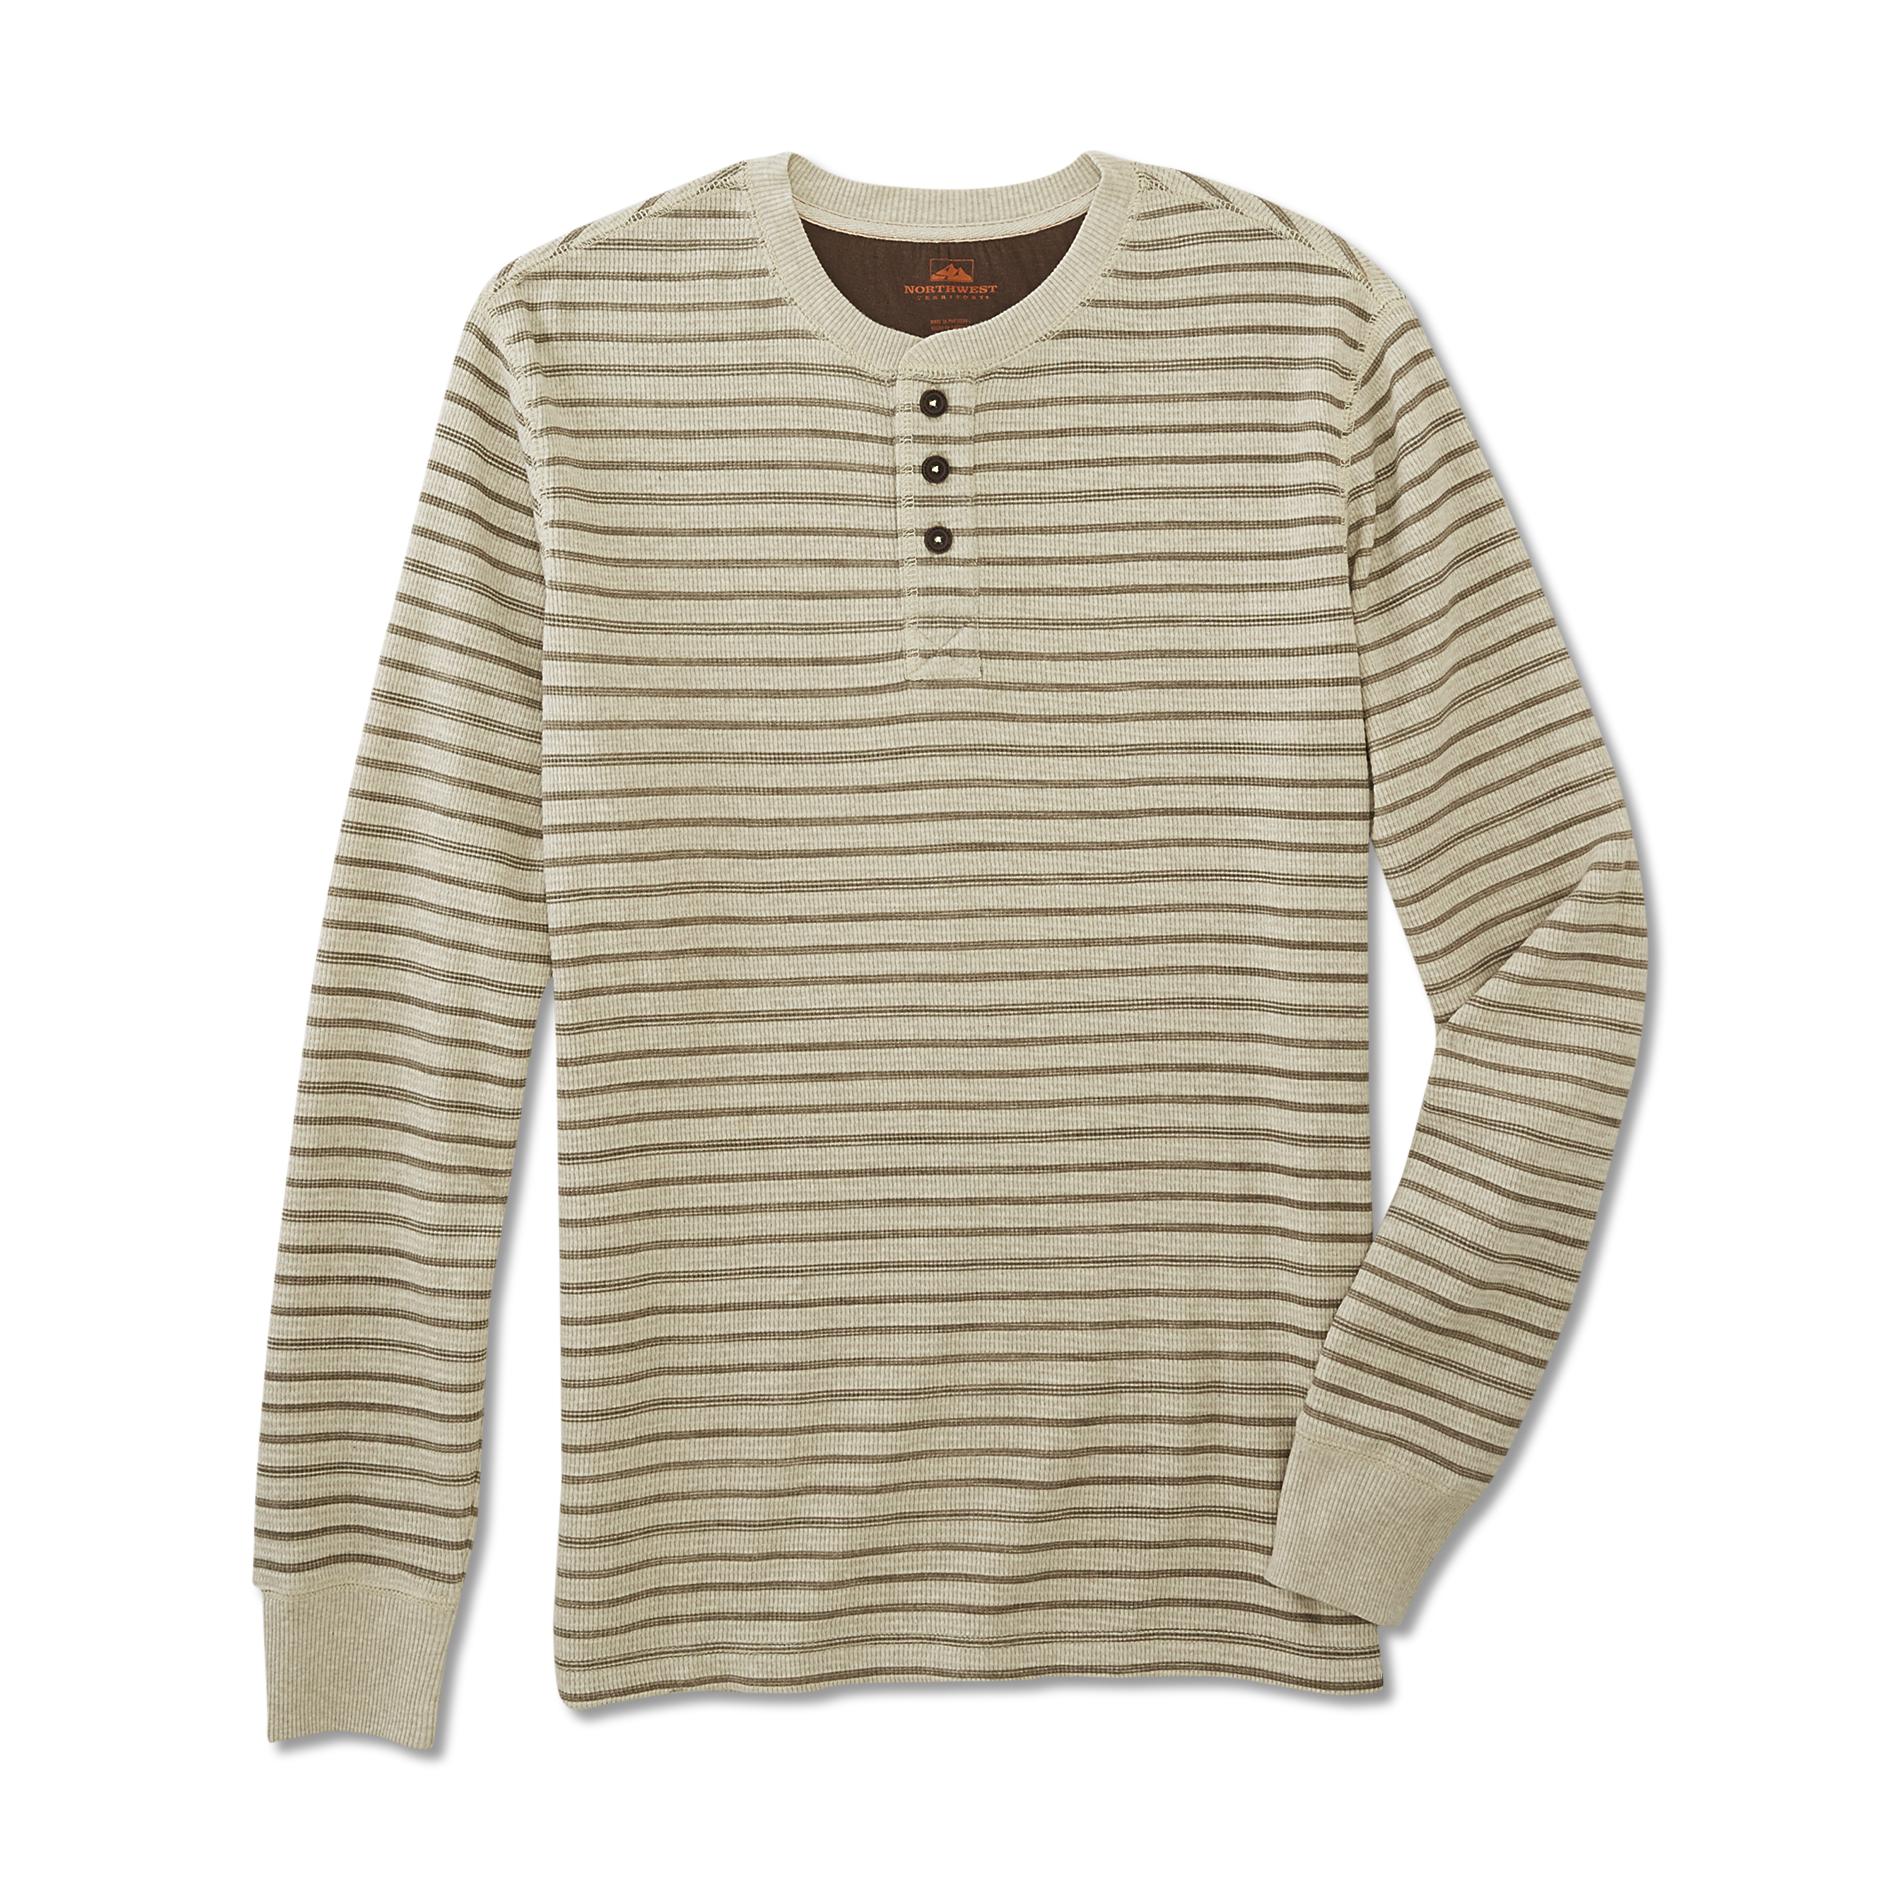 Men's Big & Tall Thermal Henley Shirt - Striped